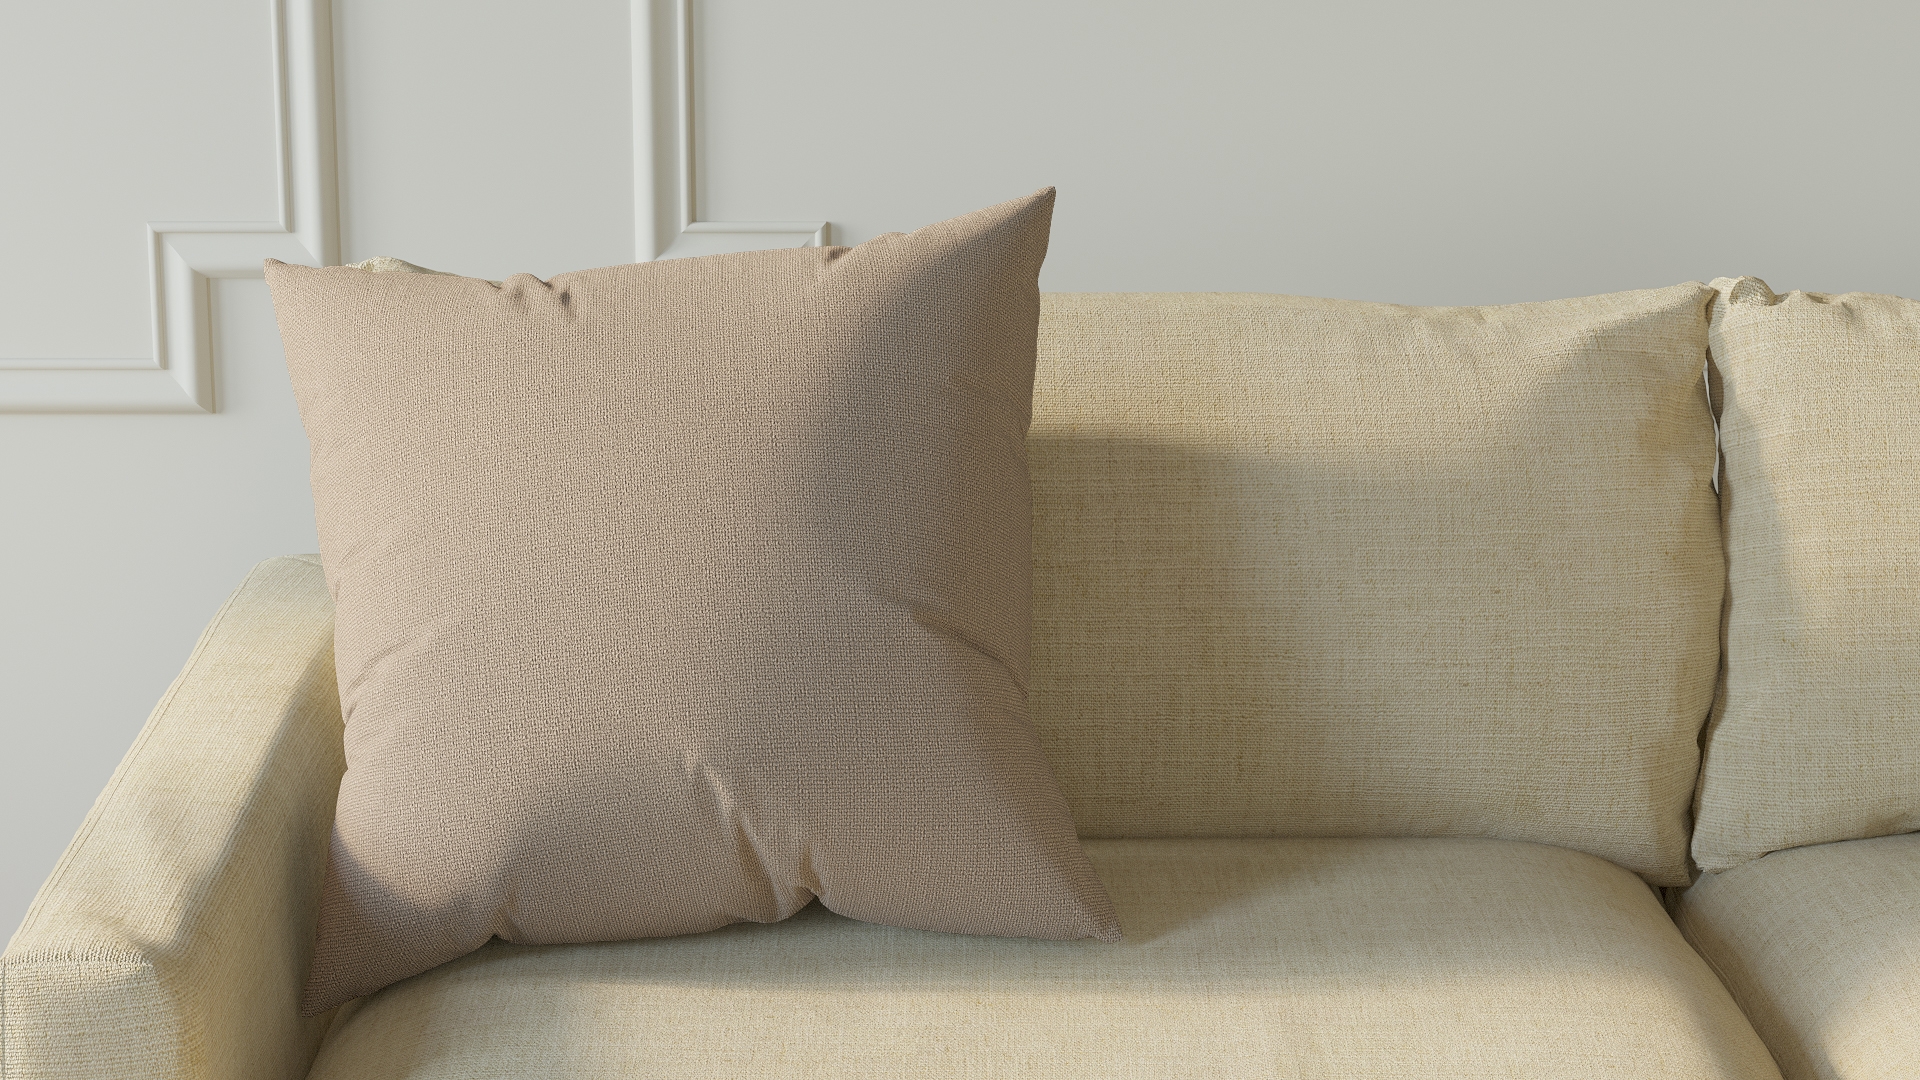 Throw Pillow 22", Husk Everyday Linen, 22" x 22" - Image 2